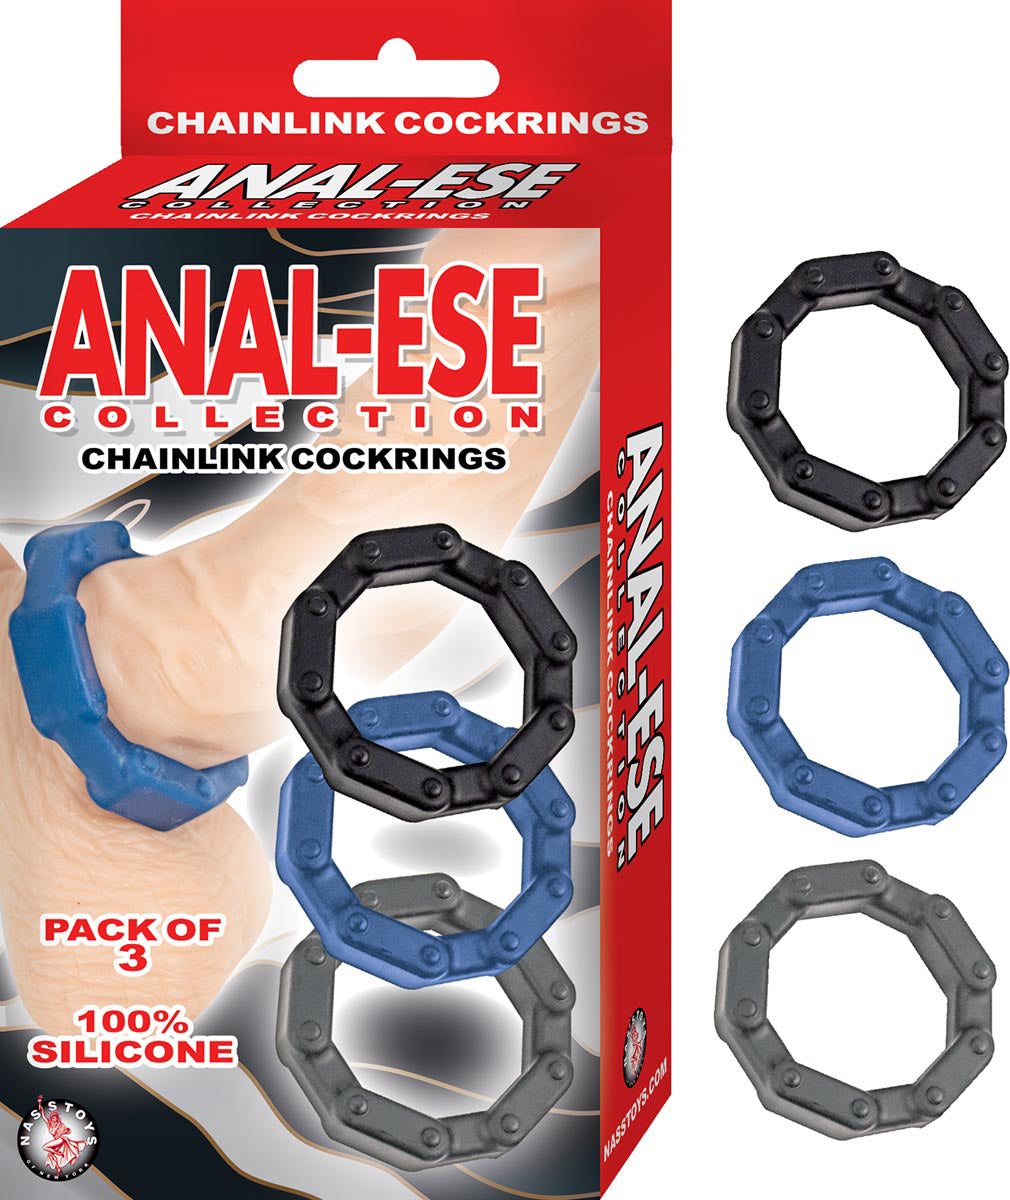 Anal-Ese Chainlink Cockrings - Black/blue/grey-1